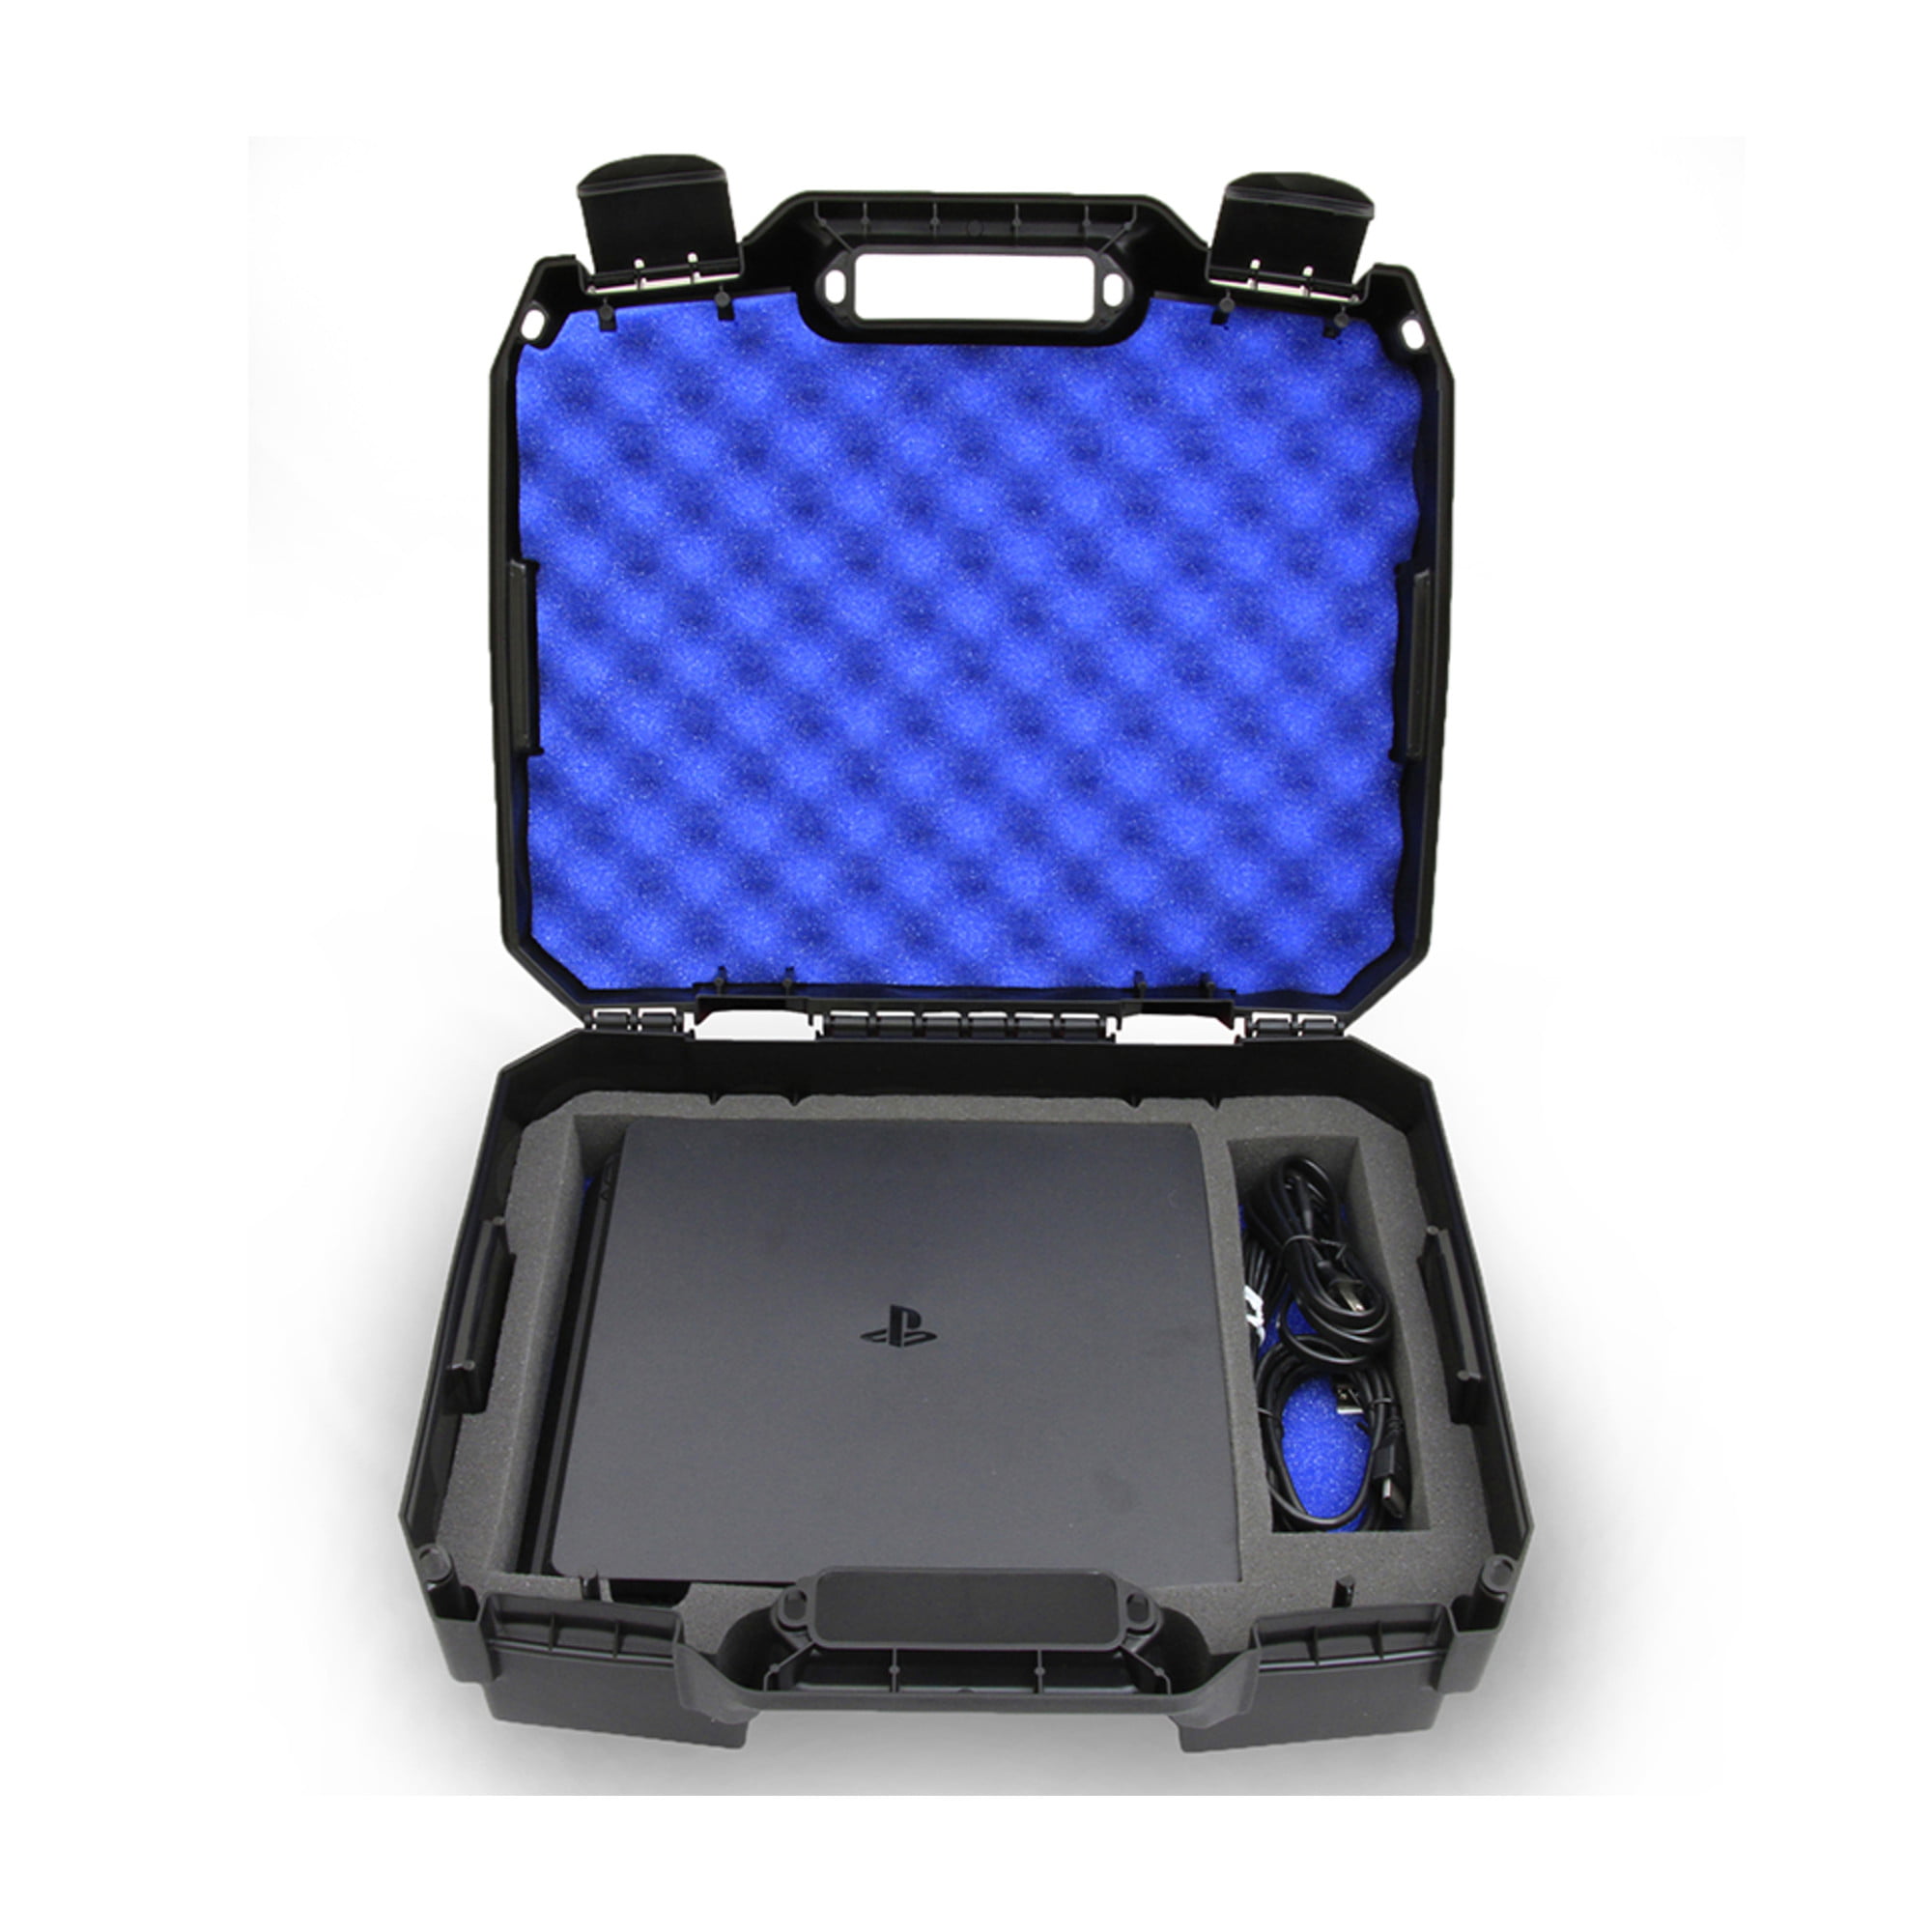 CASEMATIX Console Carrying Travel Case Custom Designed to